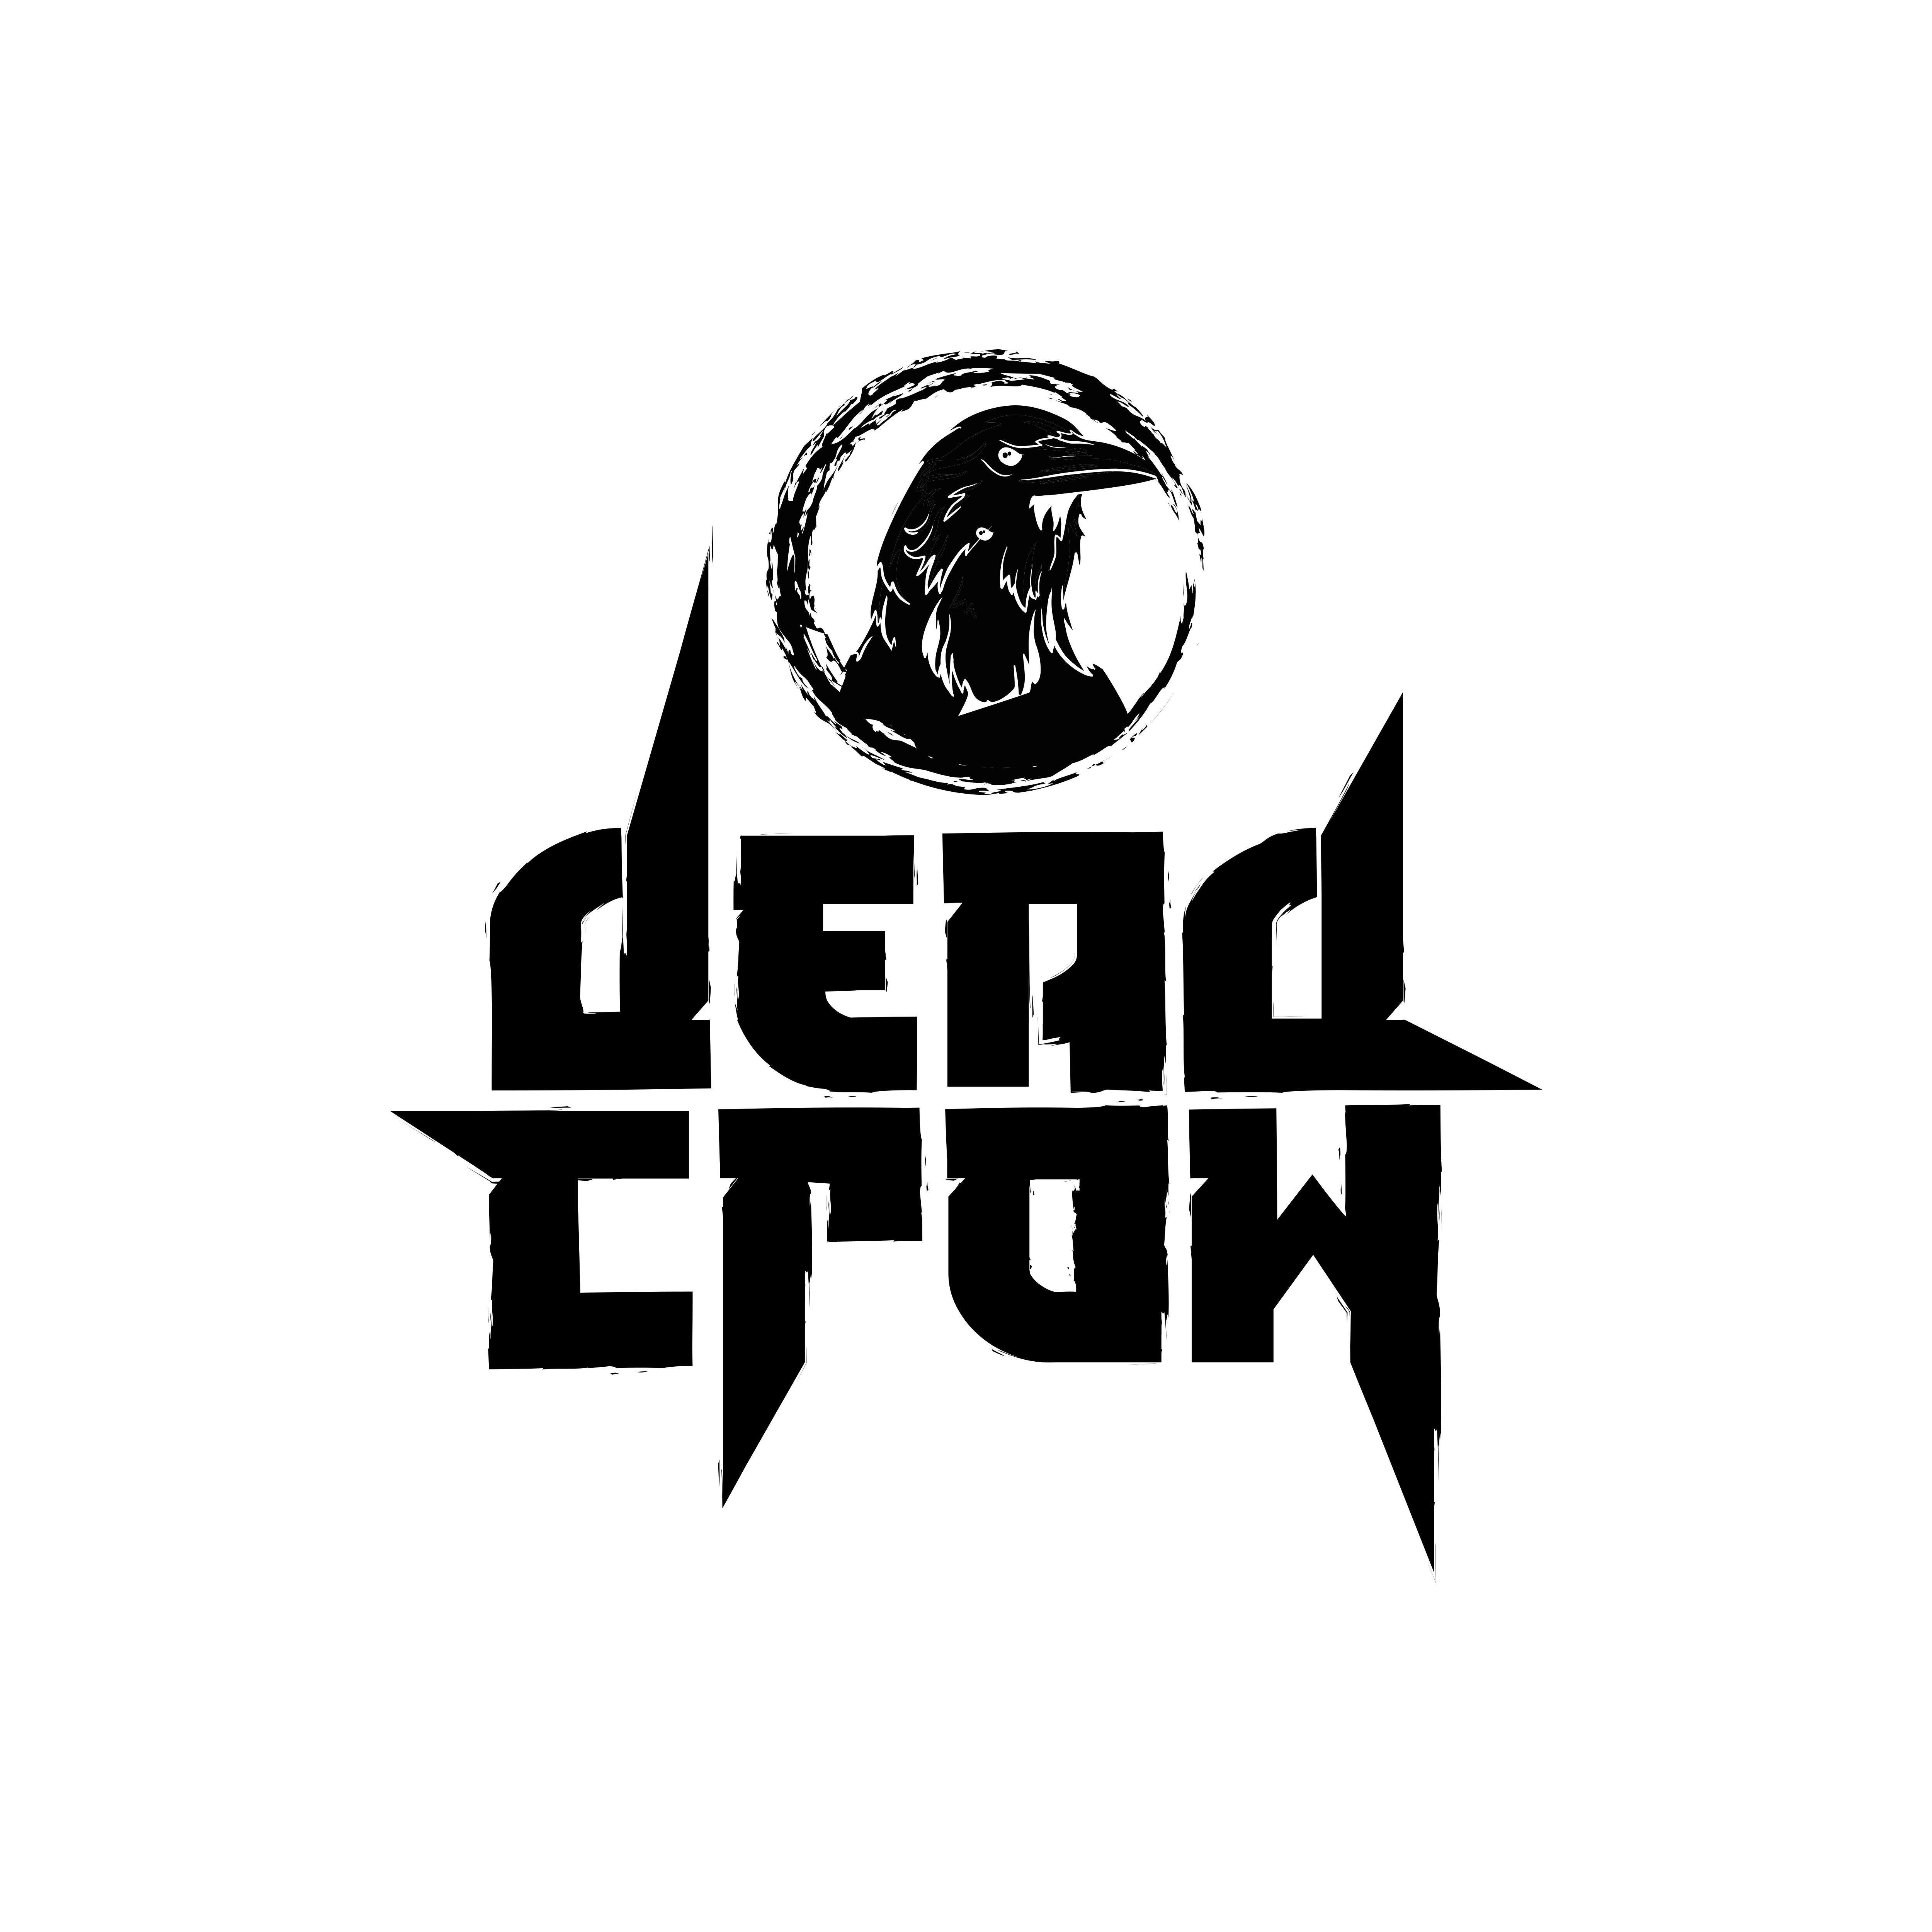 Beatz Logo - Dead Crow / Flat www.sinedgfx.com #dead #crow #beatz #logo #sinedgfx ...